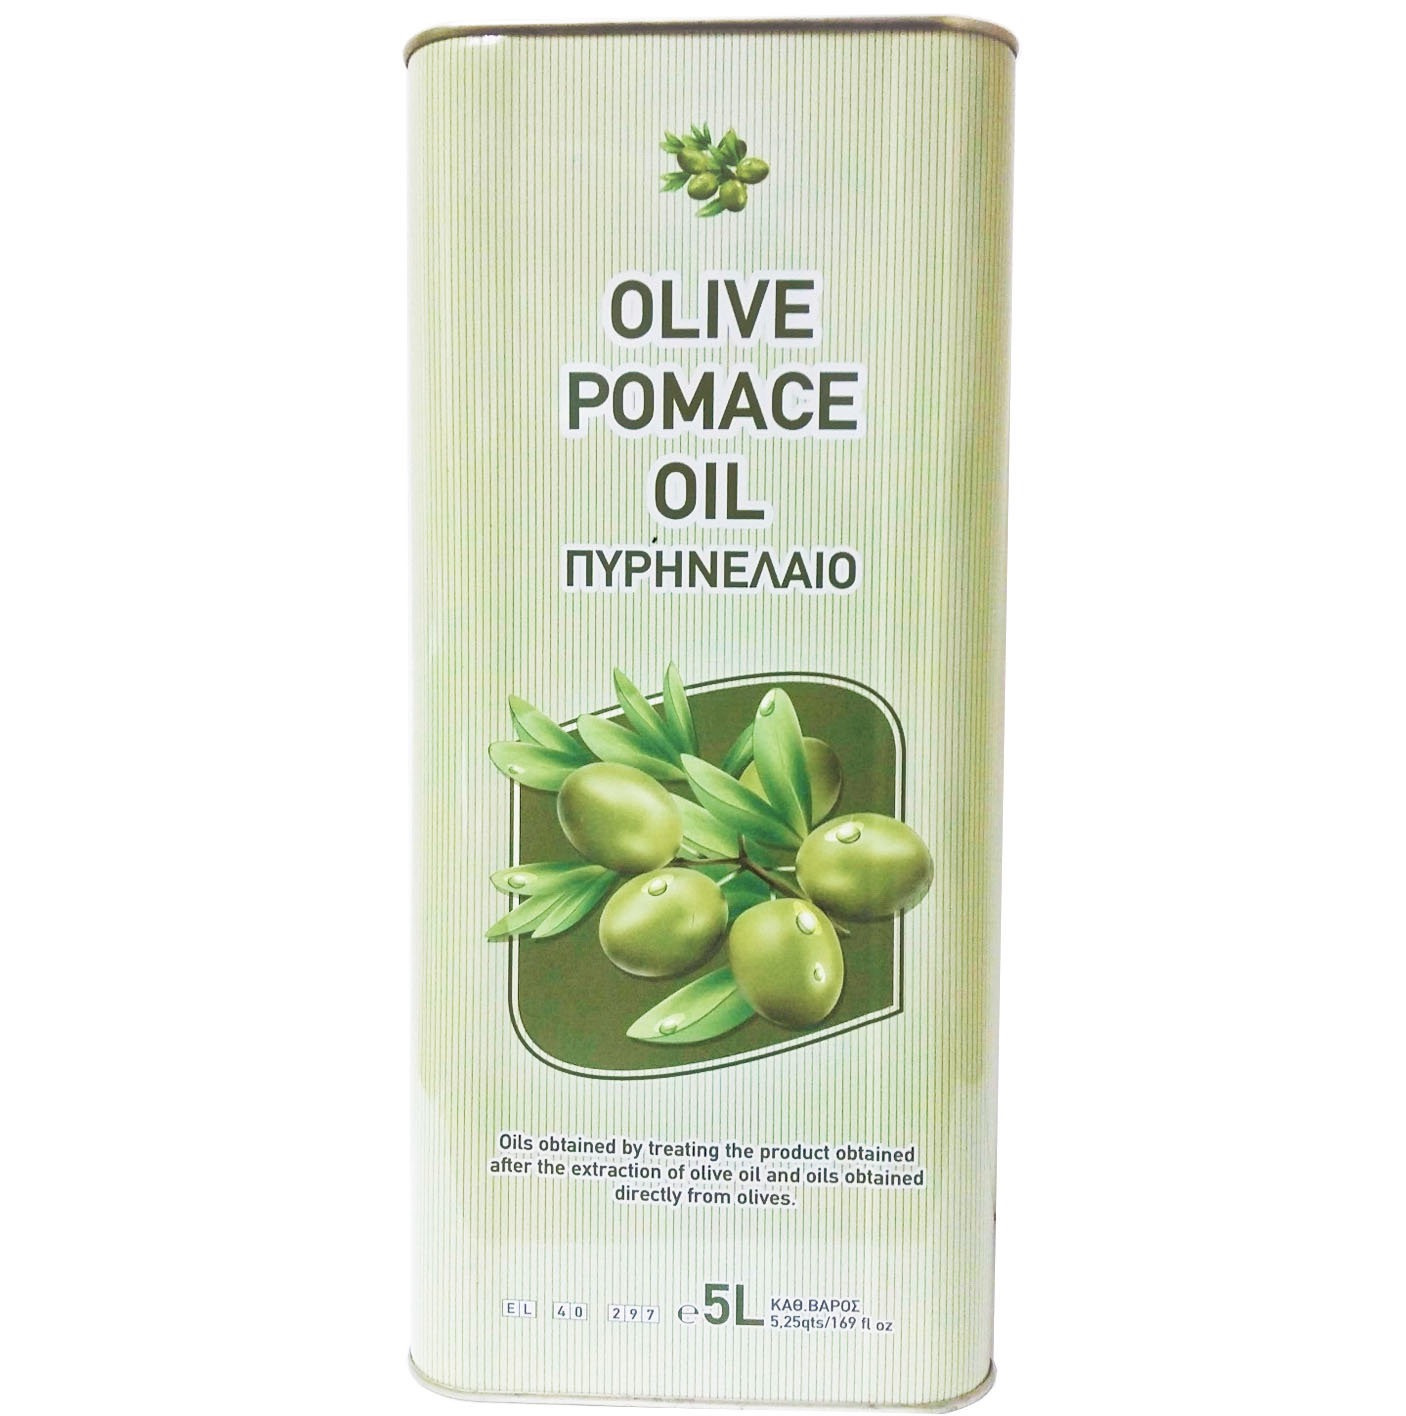 Оливковое масло имеет. DELPHI оливковое масло Pomace 5л жесть. DELPHI оливковое масло Pomace 1л пластик. Cretan Mill масло оливковое.